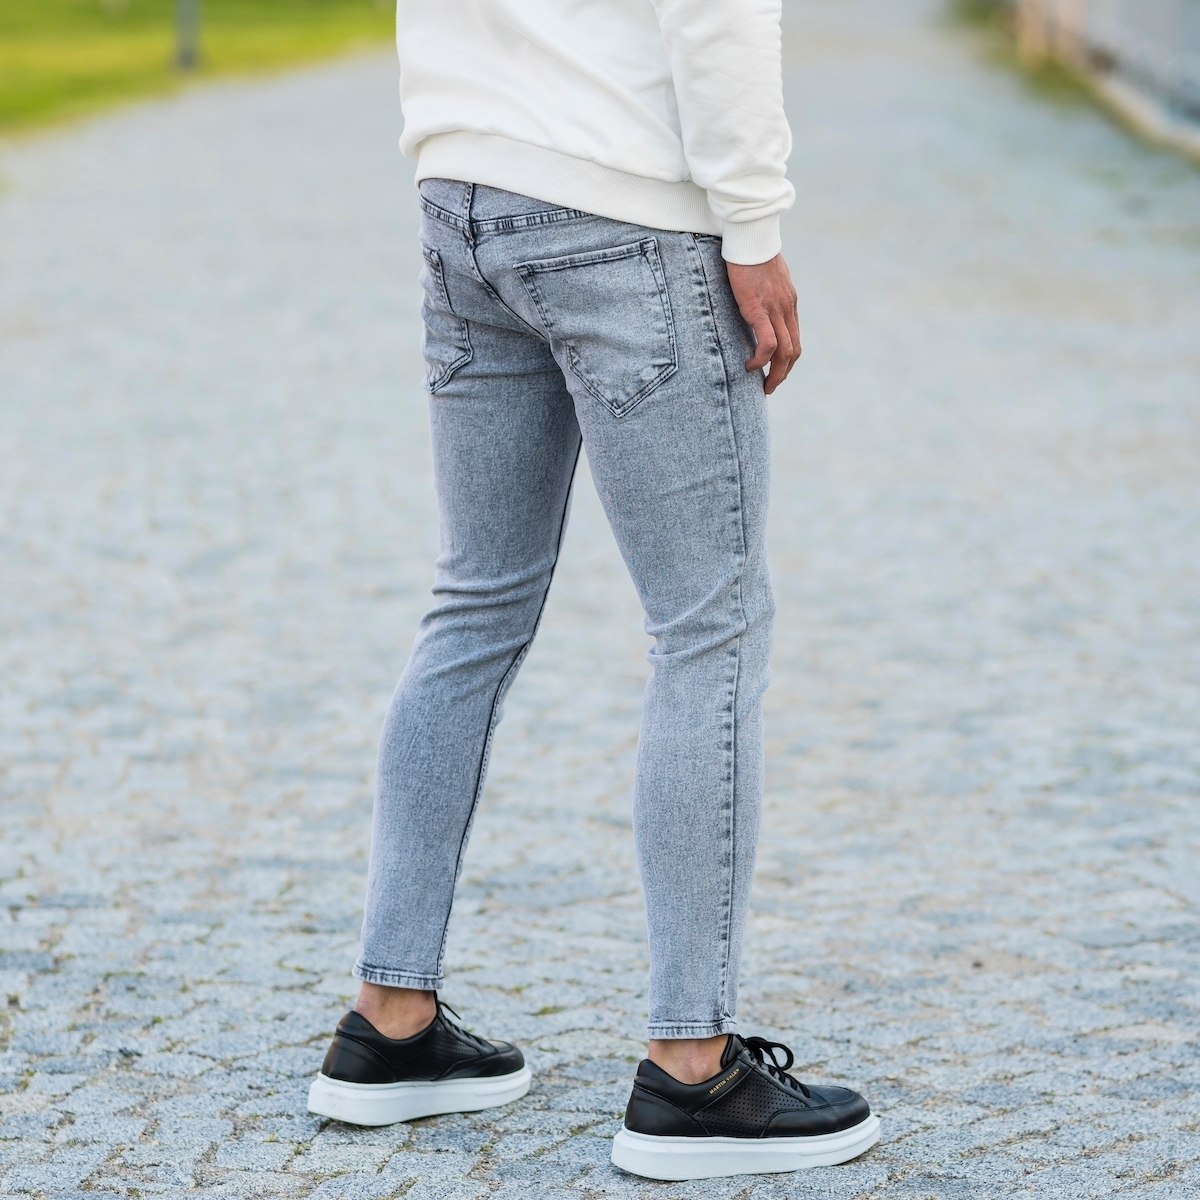 Herren Skinny Jeans in grauer Waschung - 6